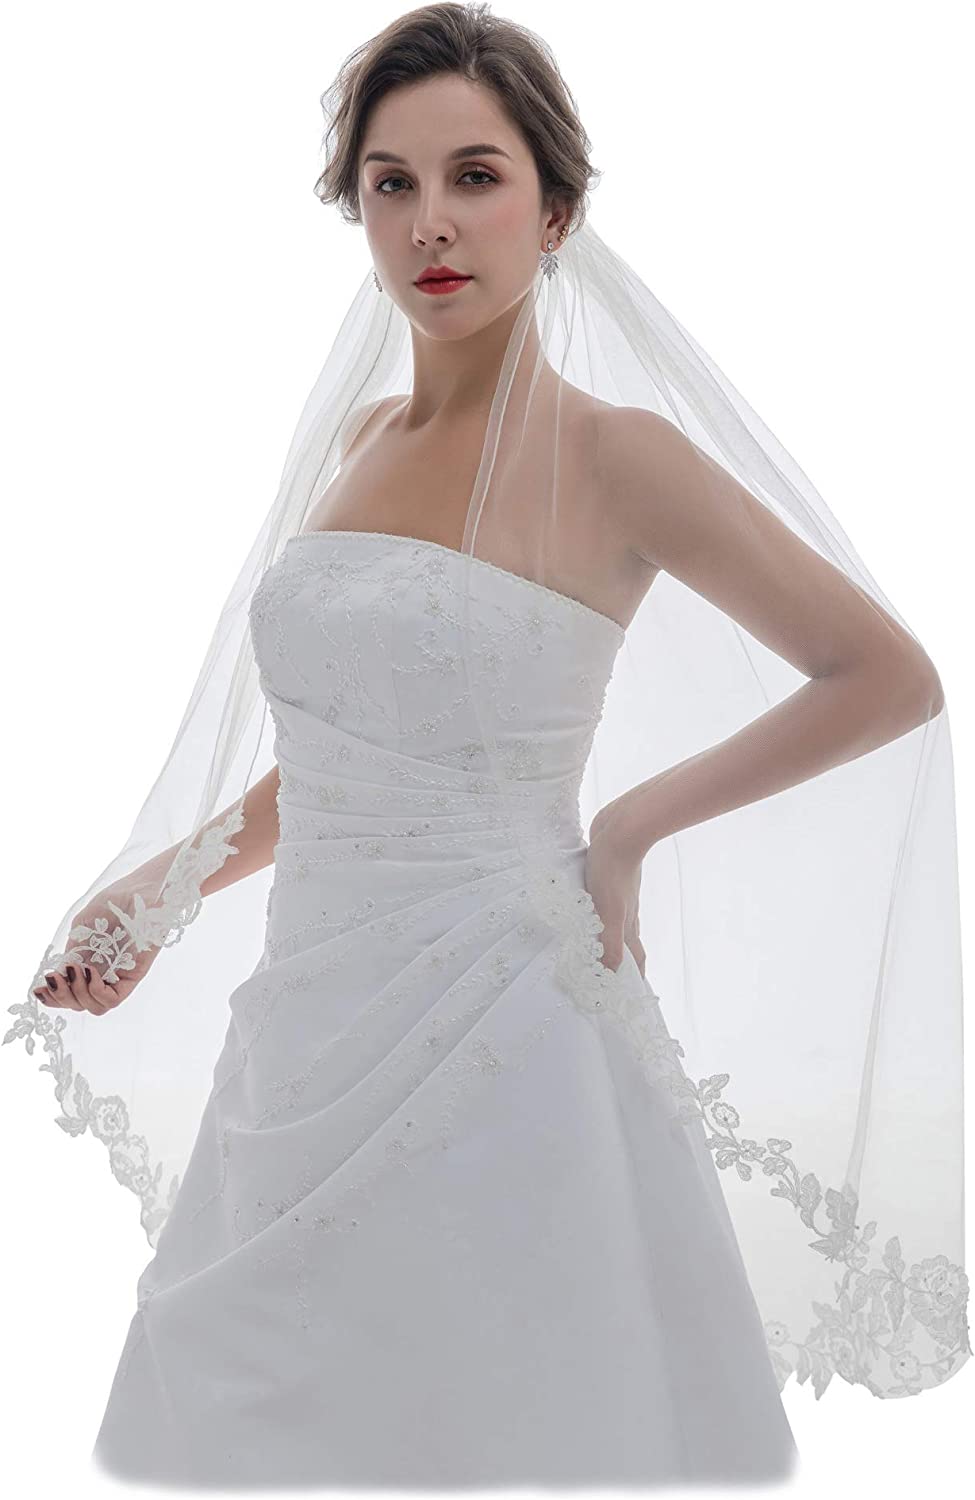 Embroidered Wedding Veils WholeSale - Price List, Bulk Buy at